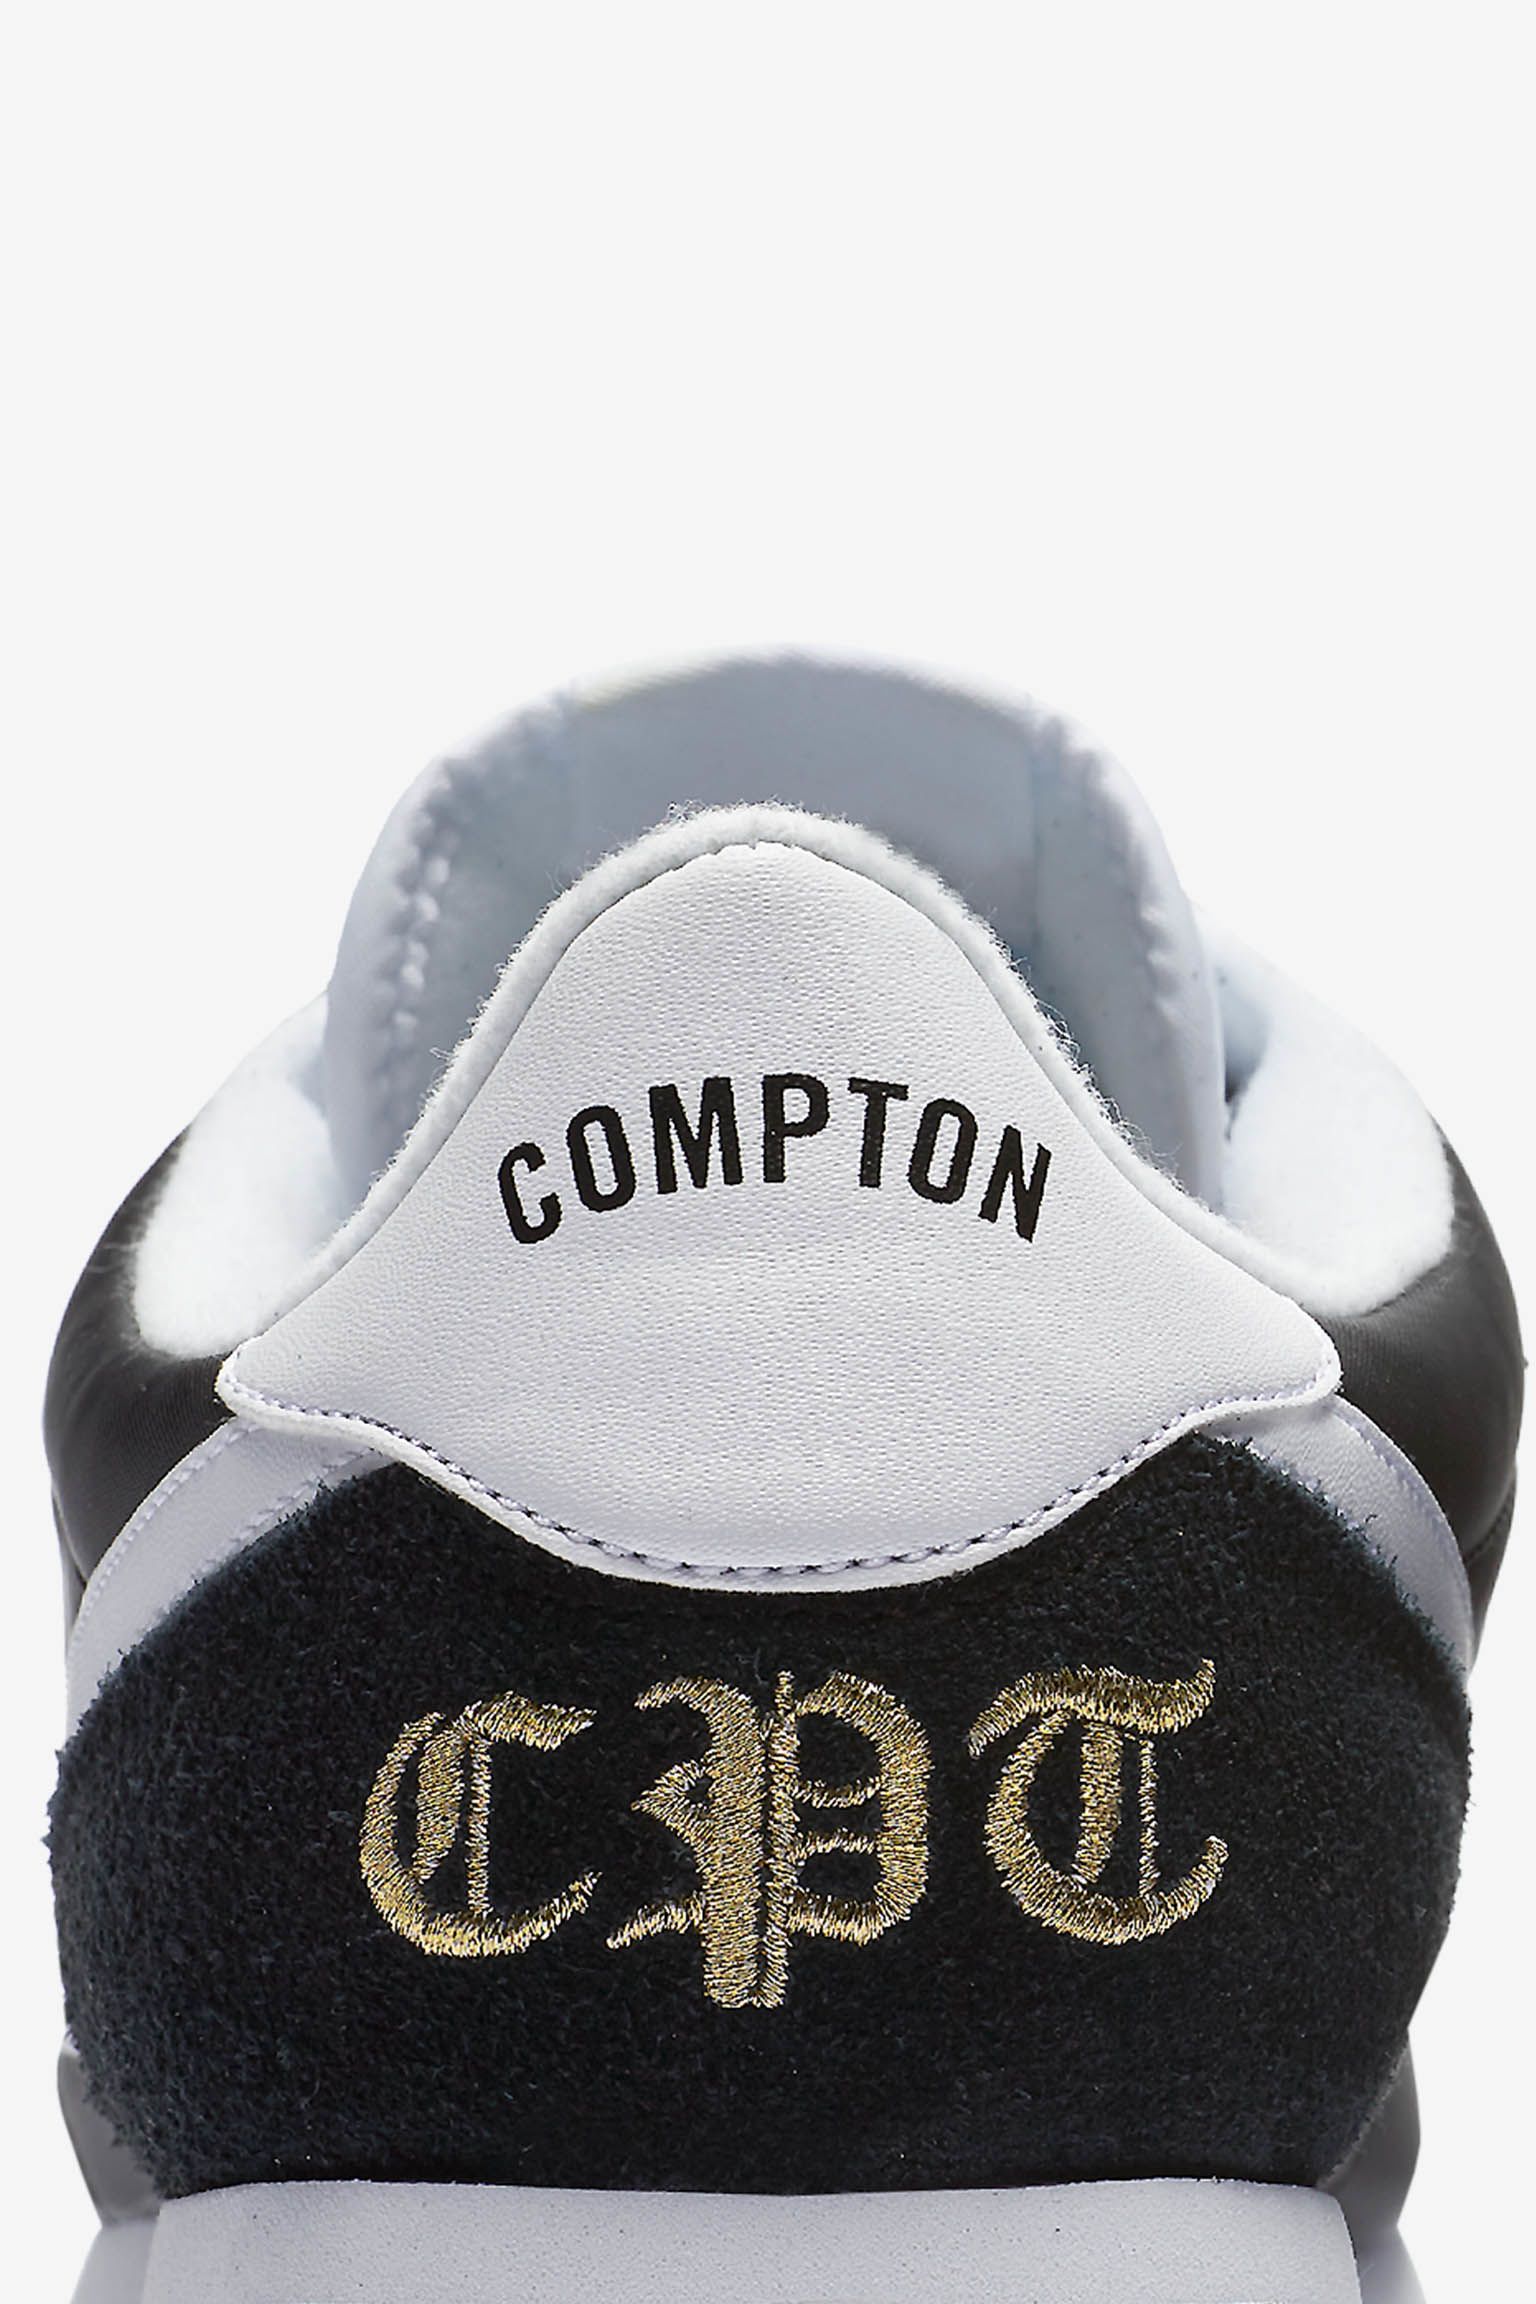 Verward verfrommeld Oeps Nike Cortez Basic Nylon 'Compton' Release Date. Nike SNKRS GB